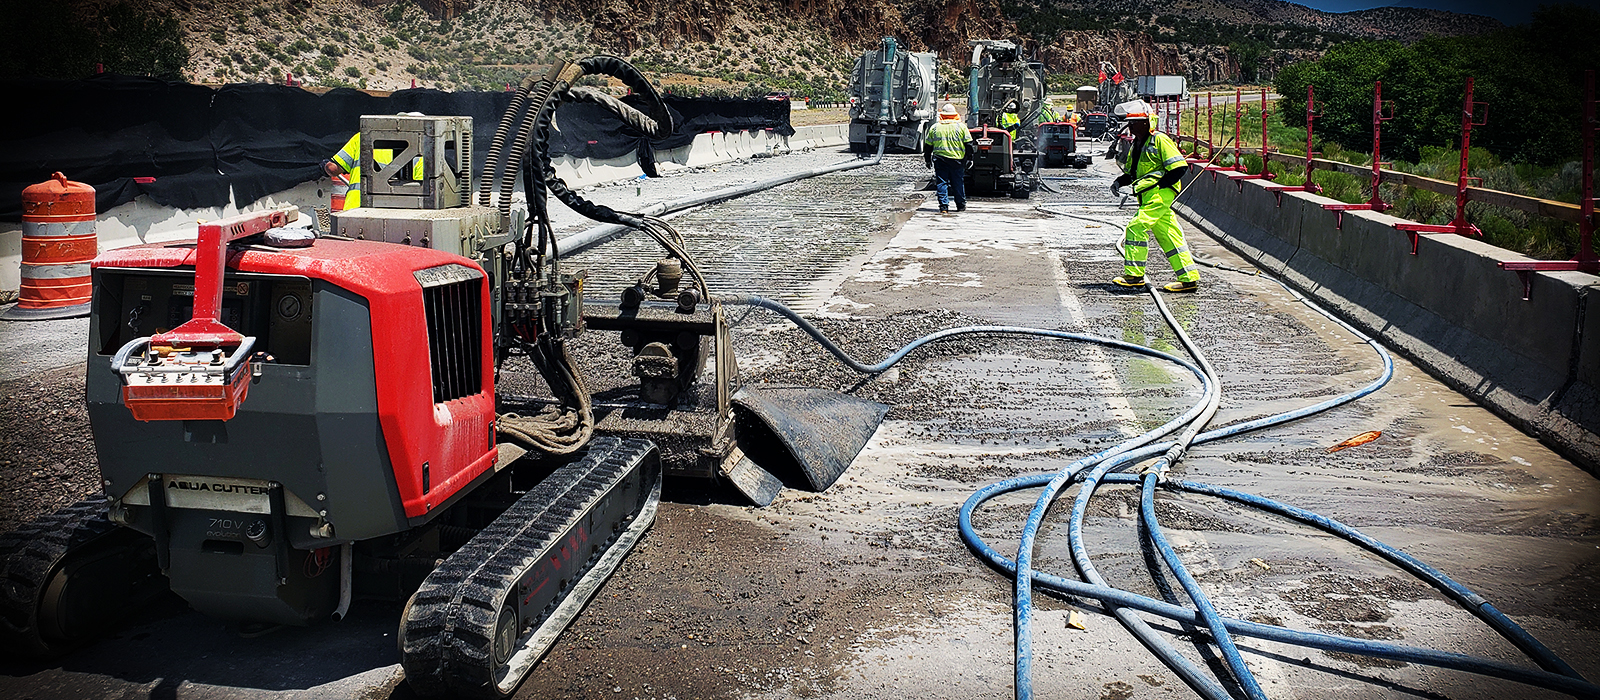 hydrodemolition aquajet systems aqua cutter work place renovation road